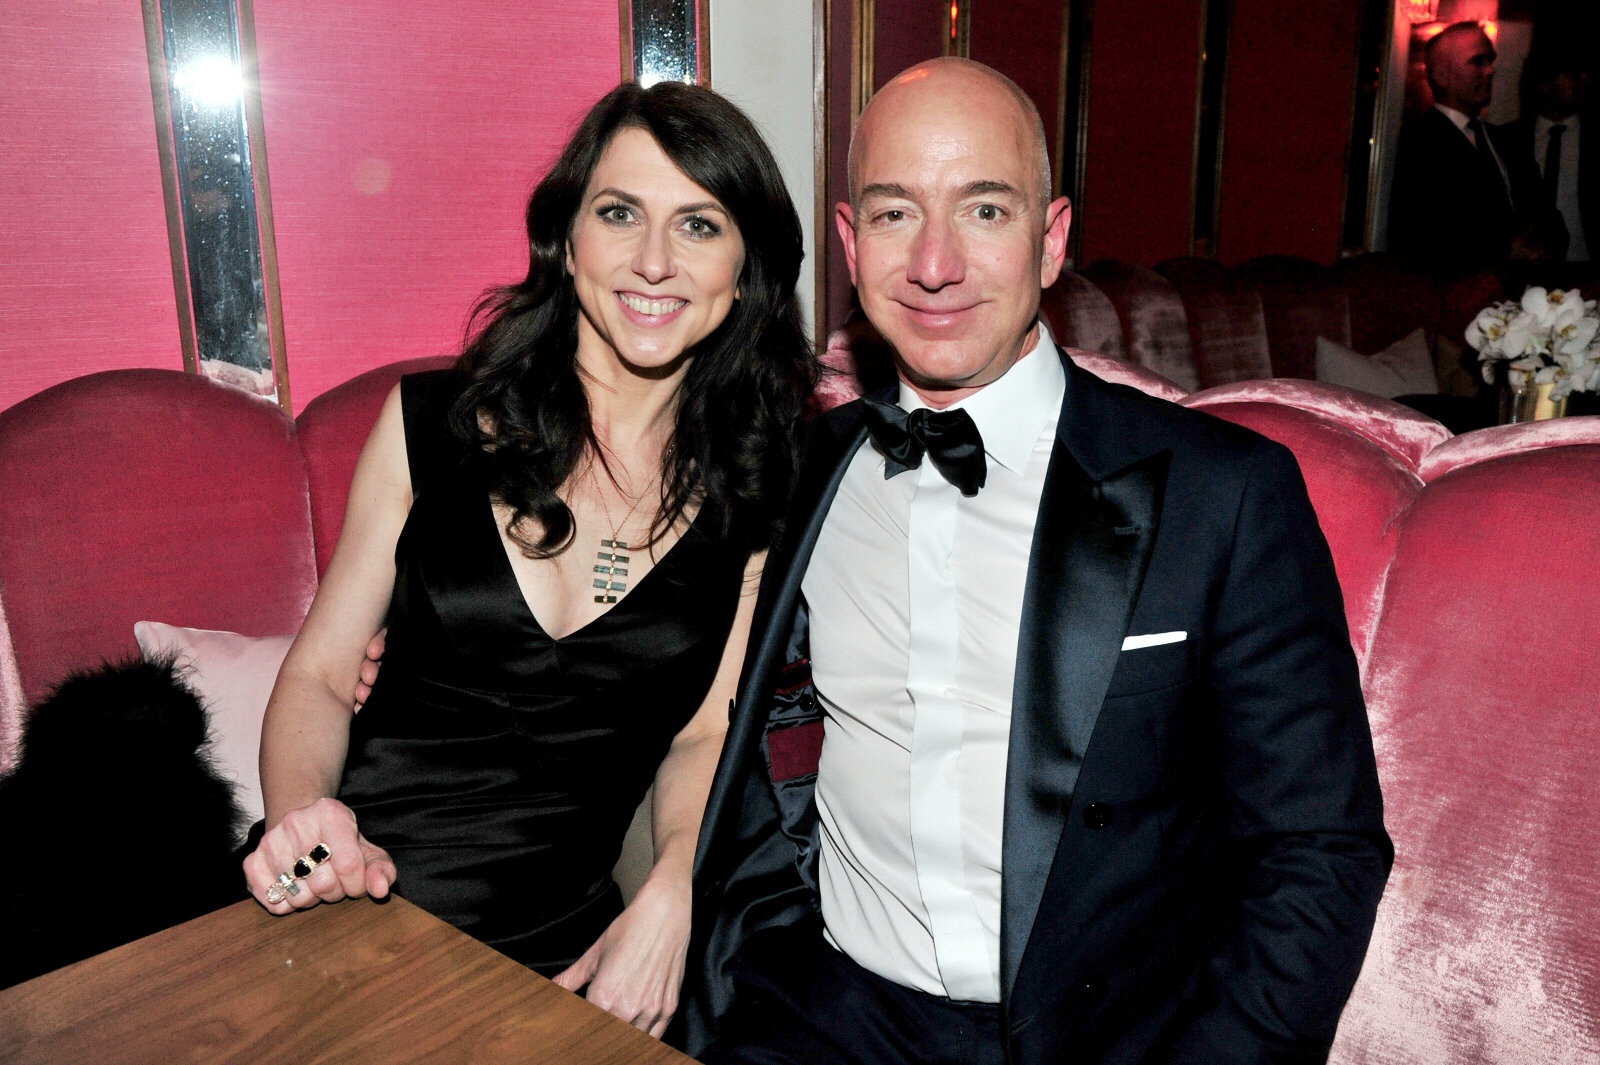 Jeff Bezos and family donate $33 million to Dreamers scholarship program